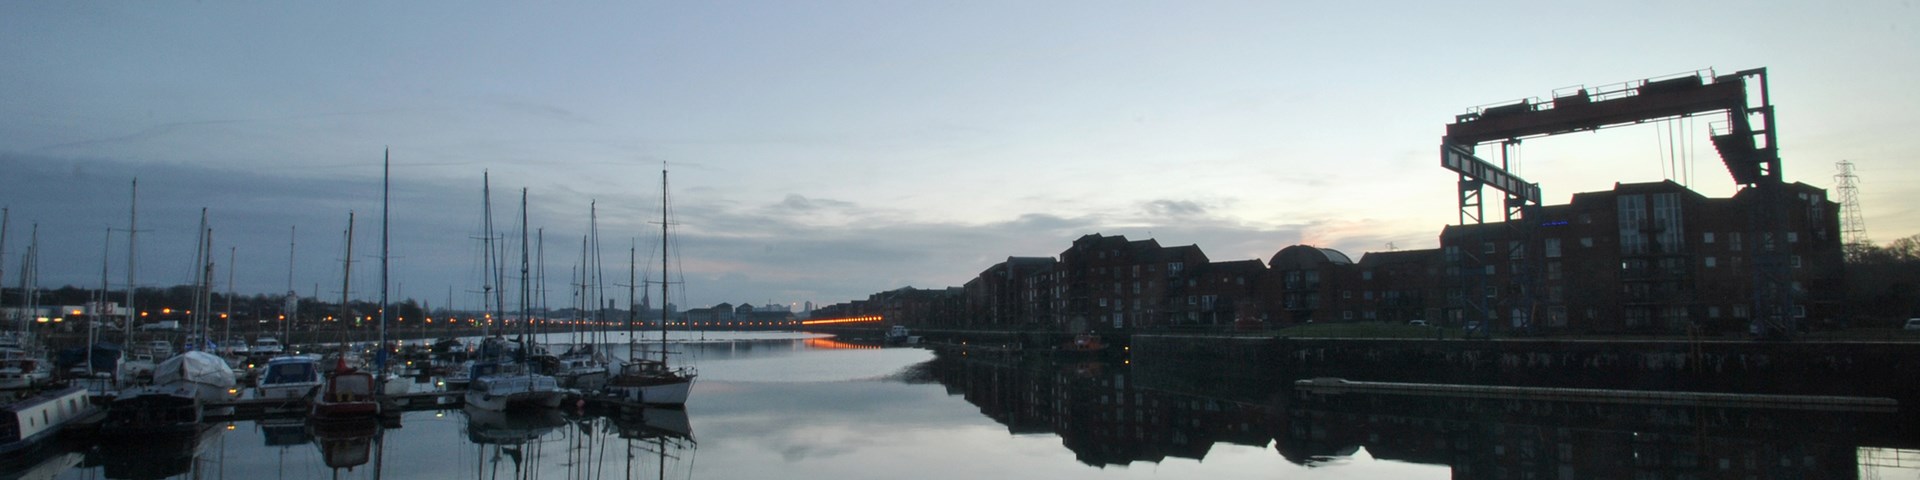 Evening photo of Preston marina